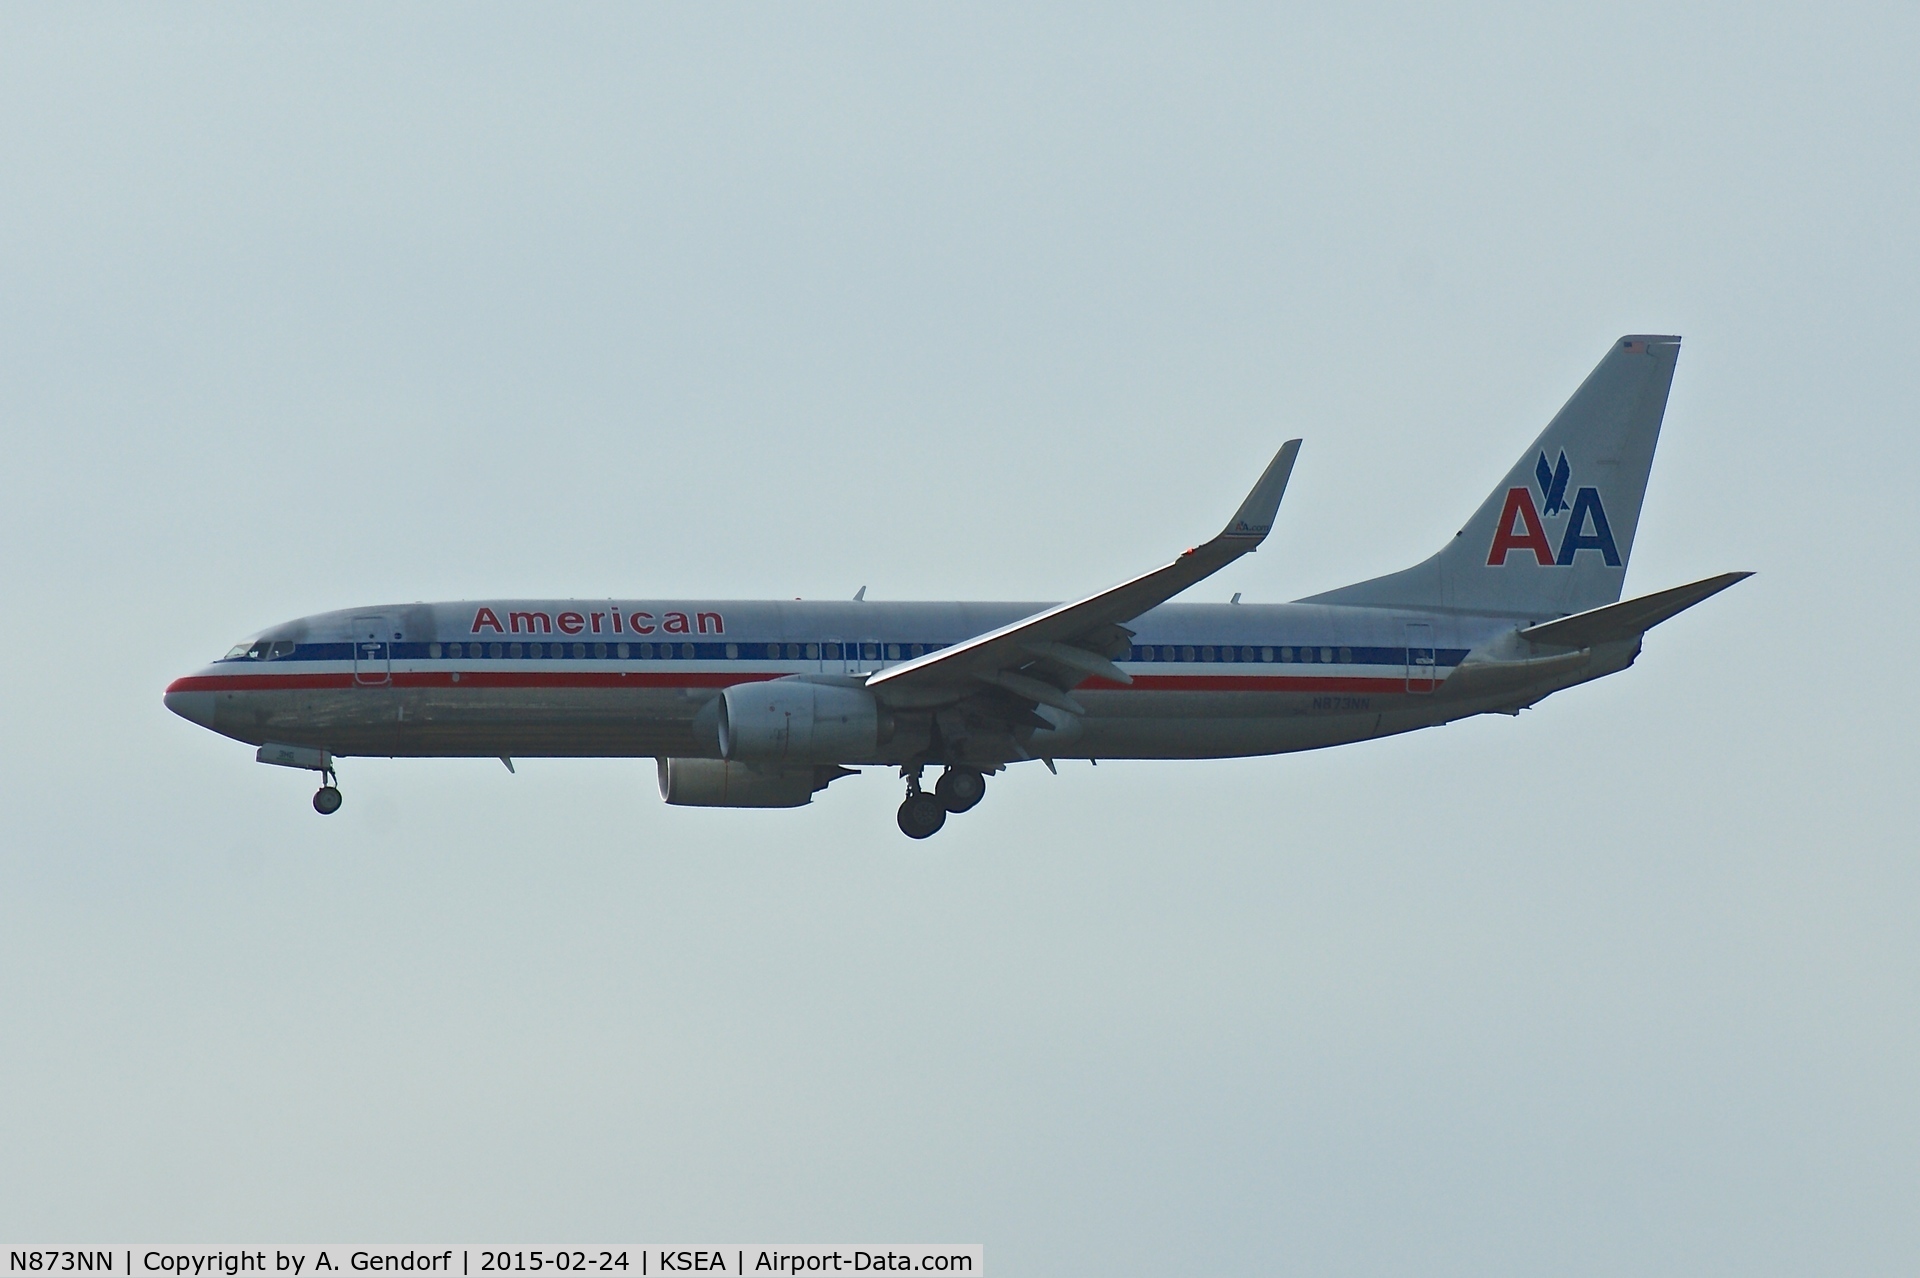 N873NN, 2011 Boeing 737-823 C/N 40766, American Airlines, is here landing at Seattle-Tacoma Int'l(KSEA)